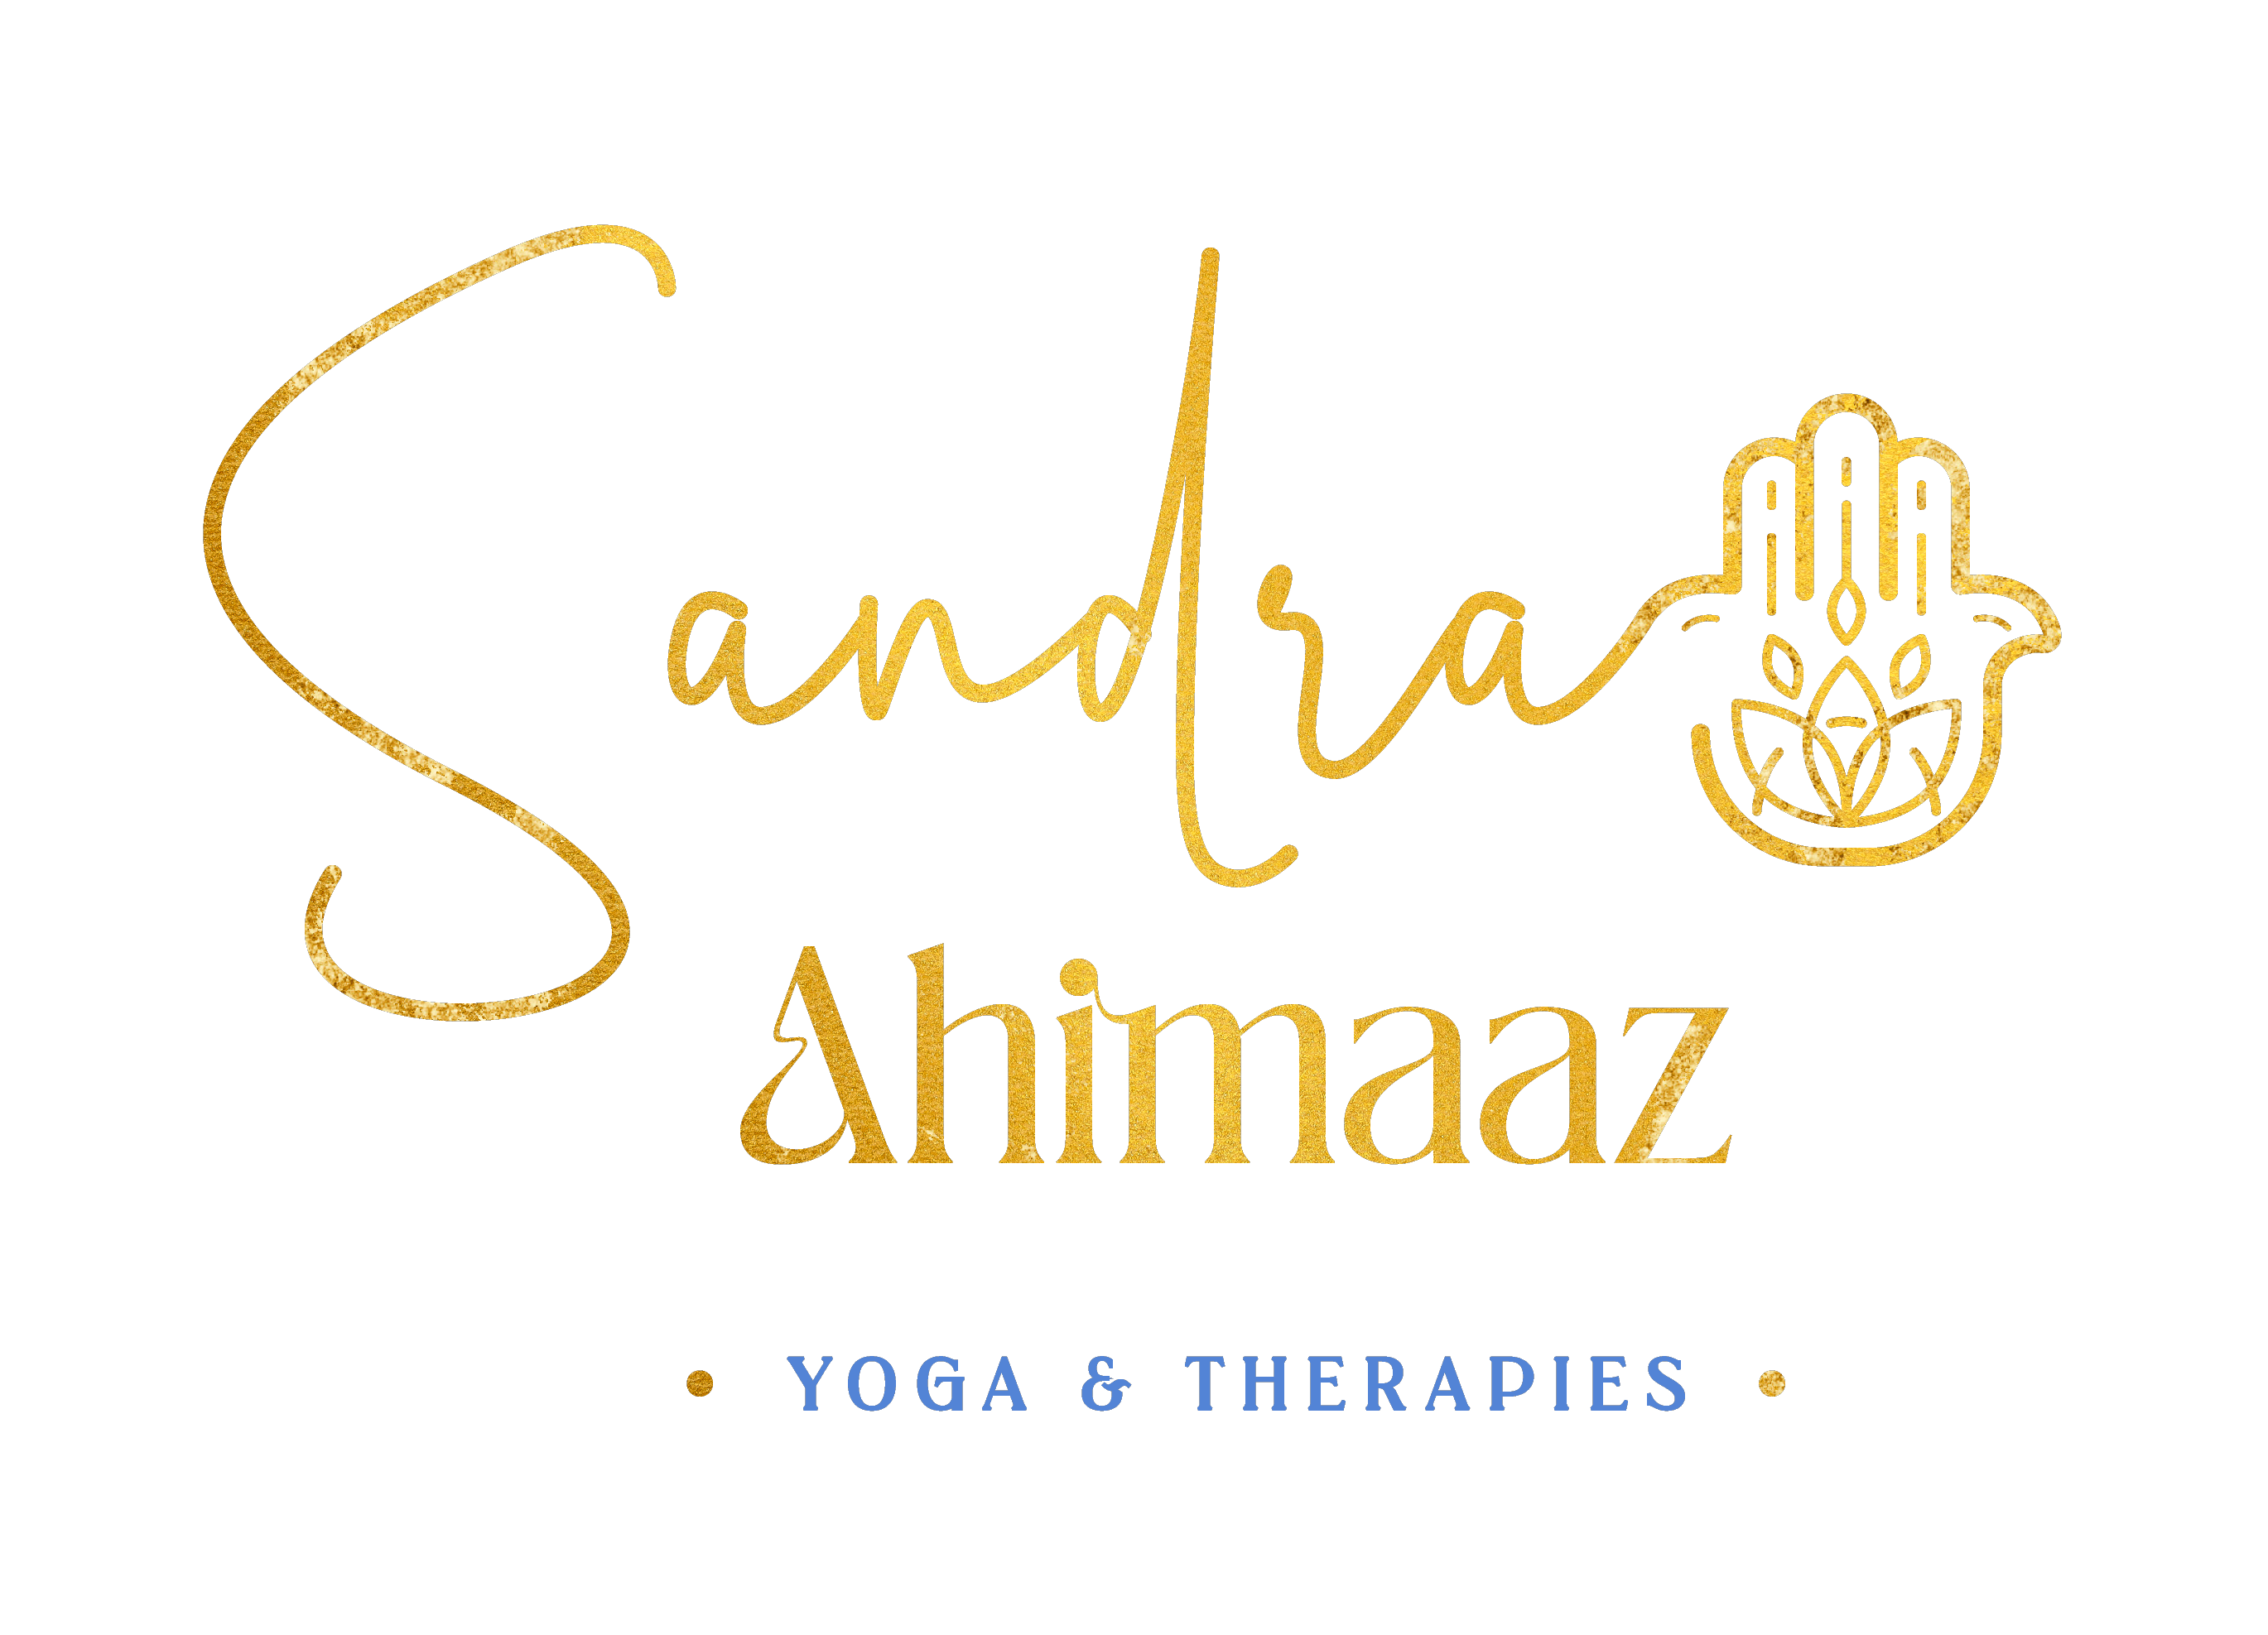 Sandra Yoga & Therapies